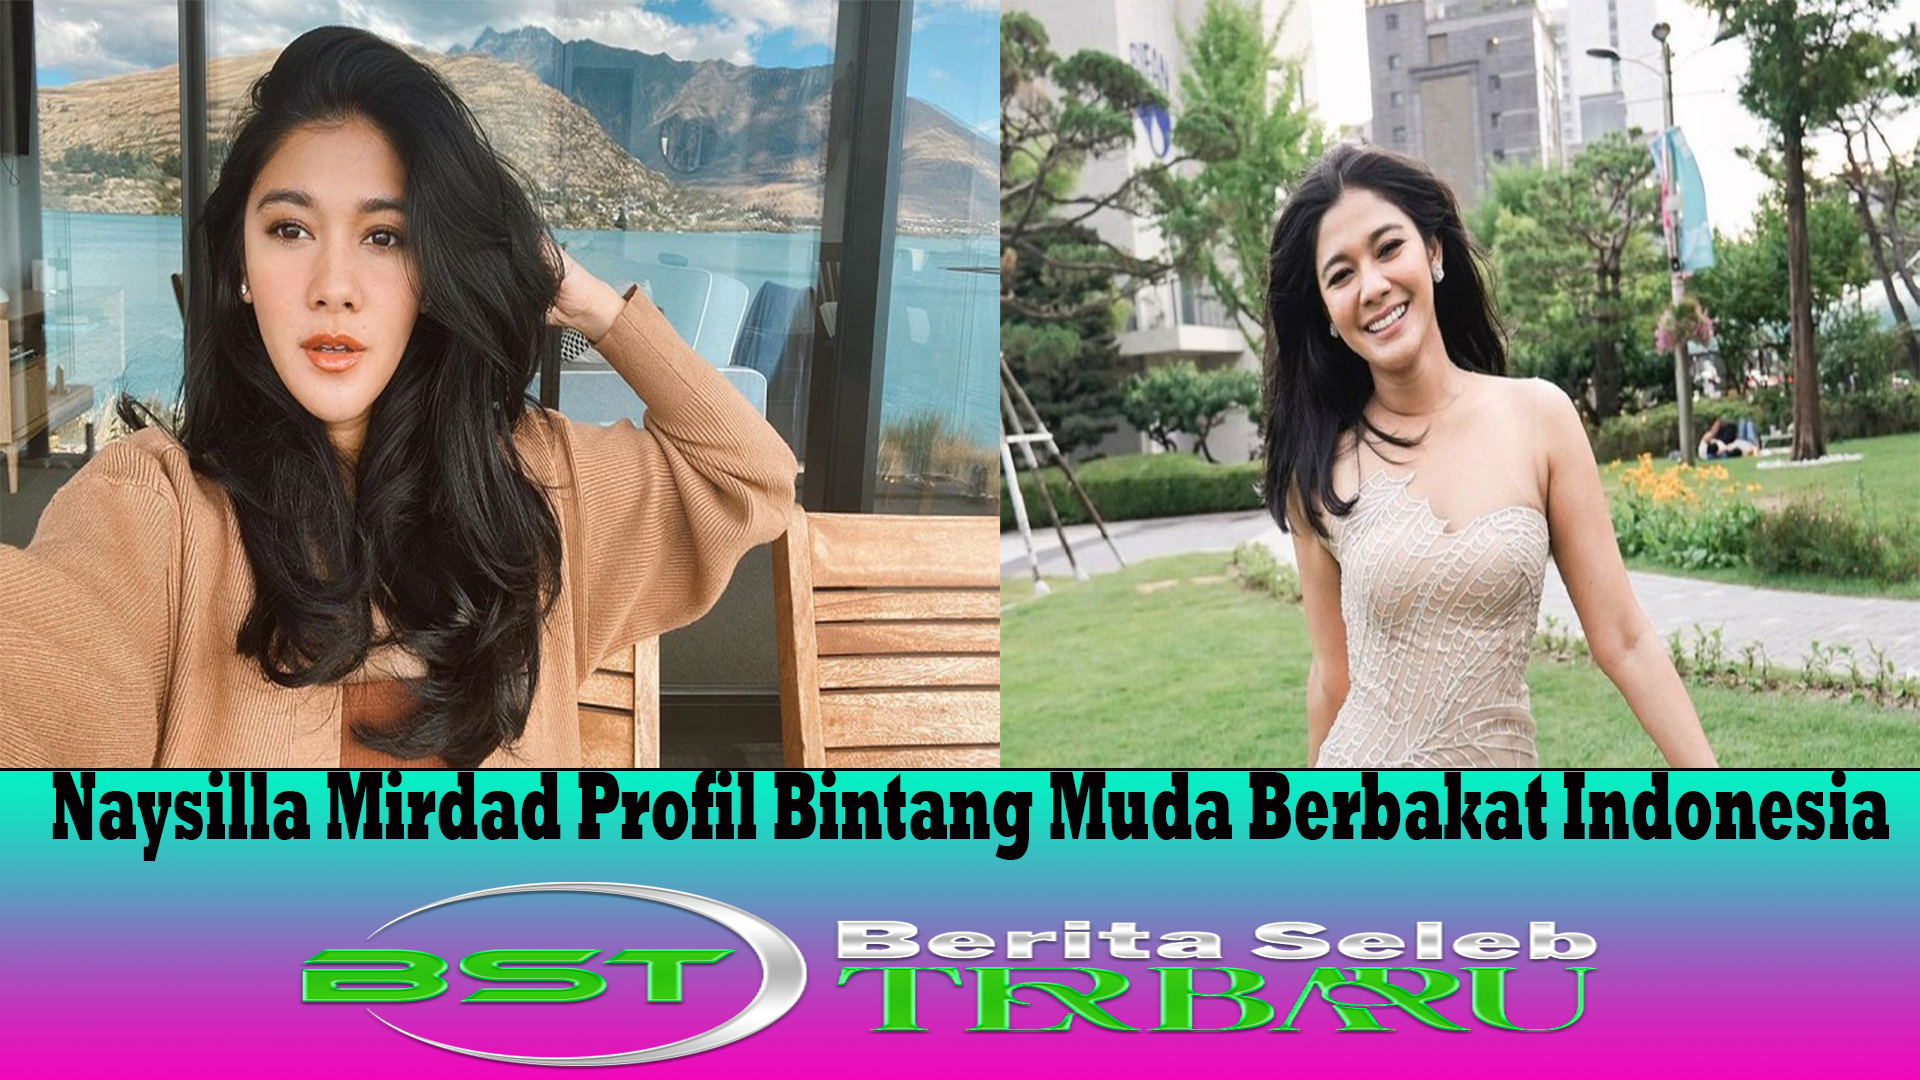 Naysilla Mirdad Profil Bintang Muda Berbakat Indonesia